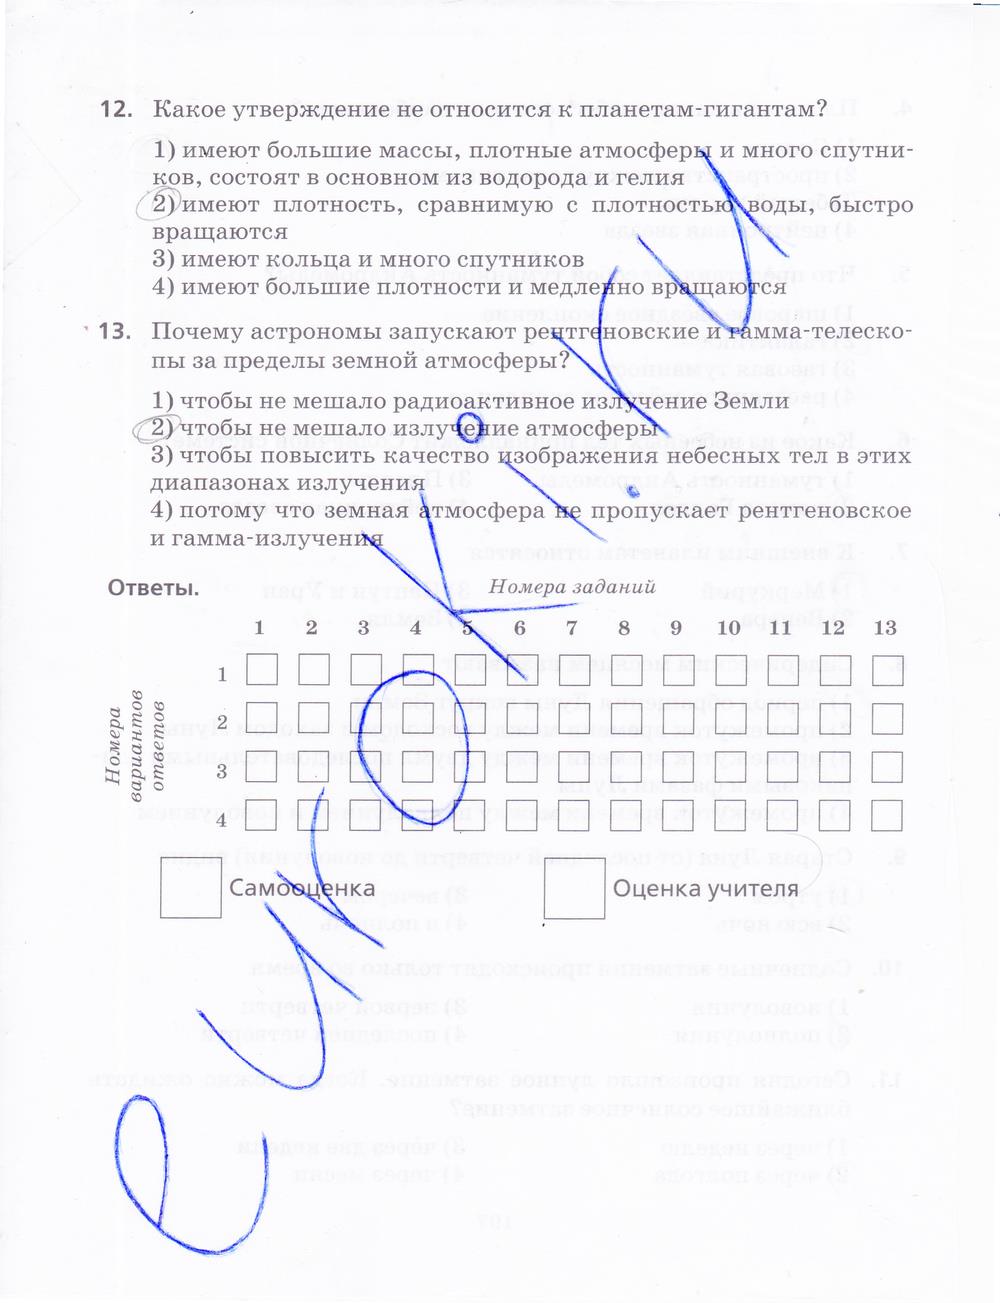 гдз 9 класс рабочая тетрадь страница 198 физика Пурышева, Важеевская, Чаругин